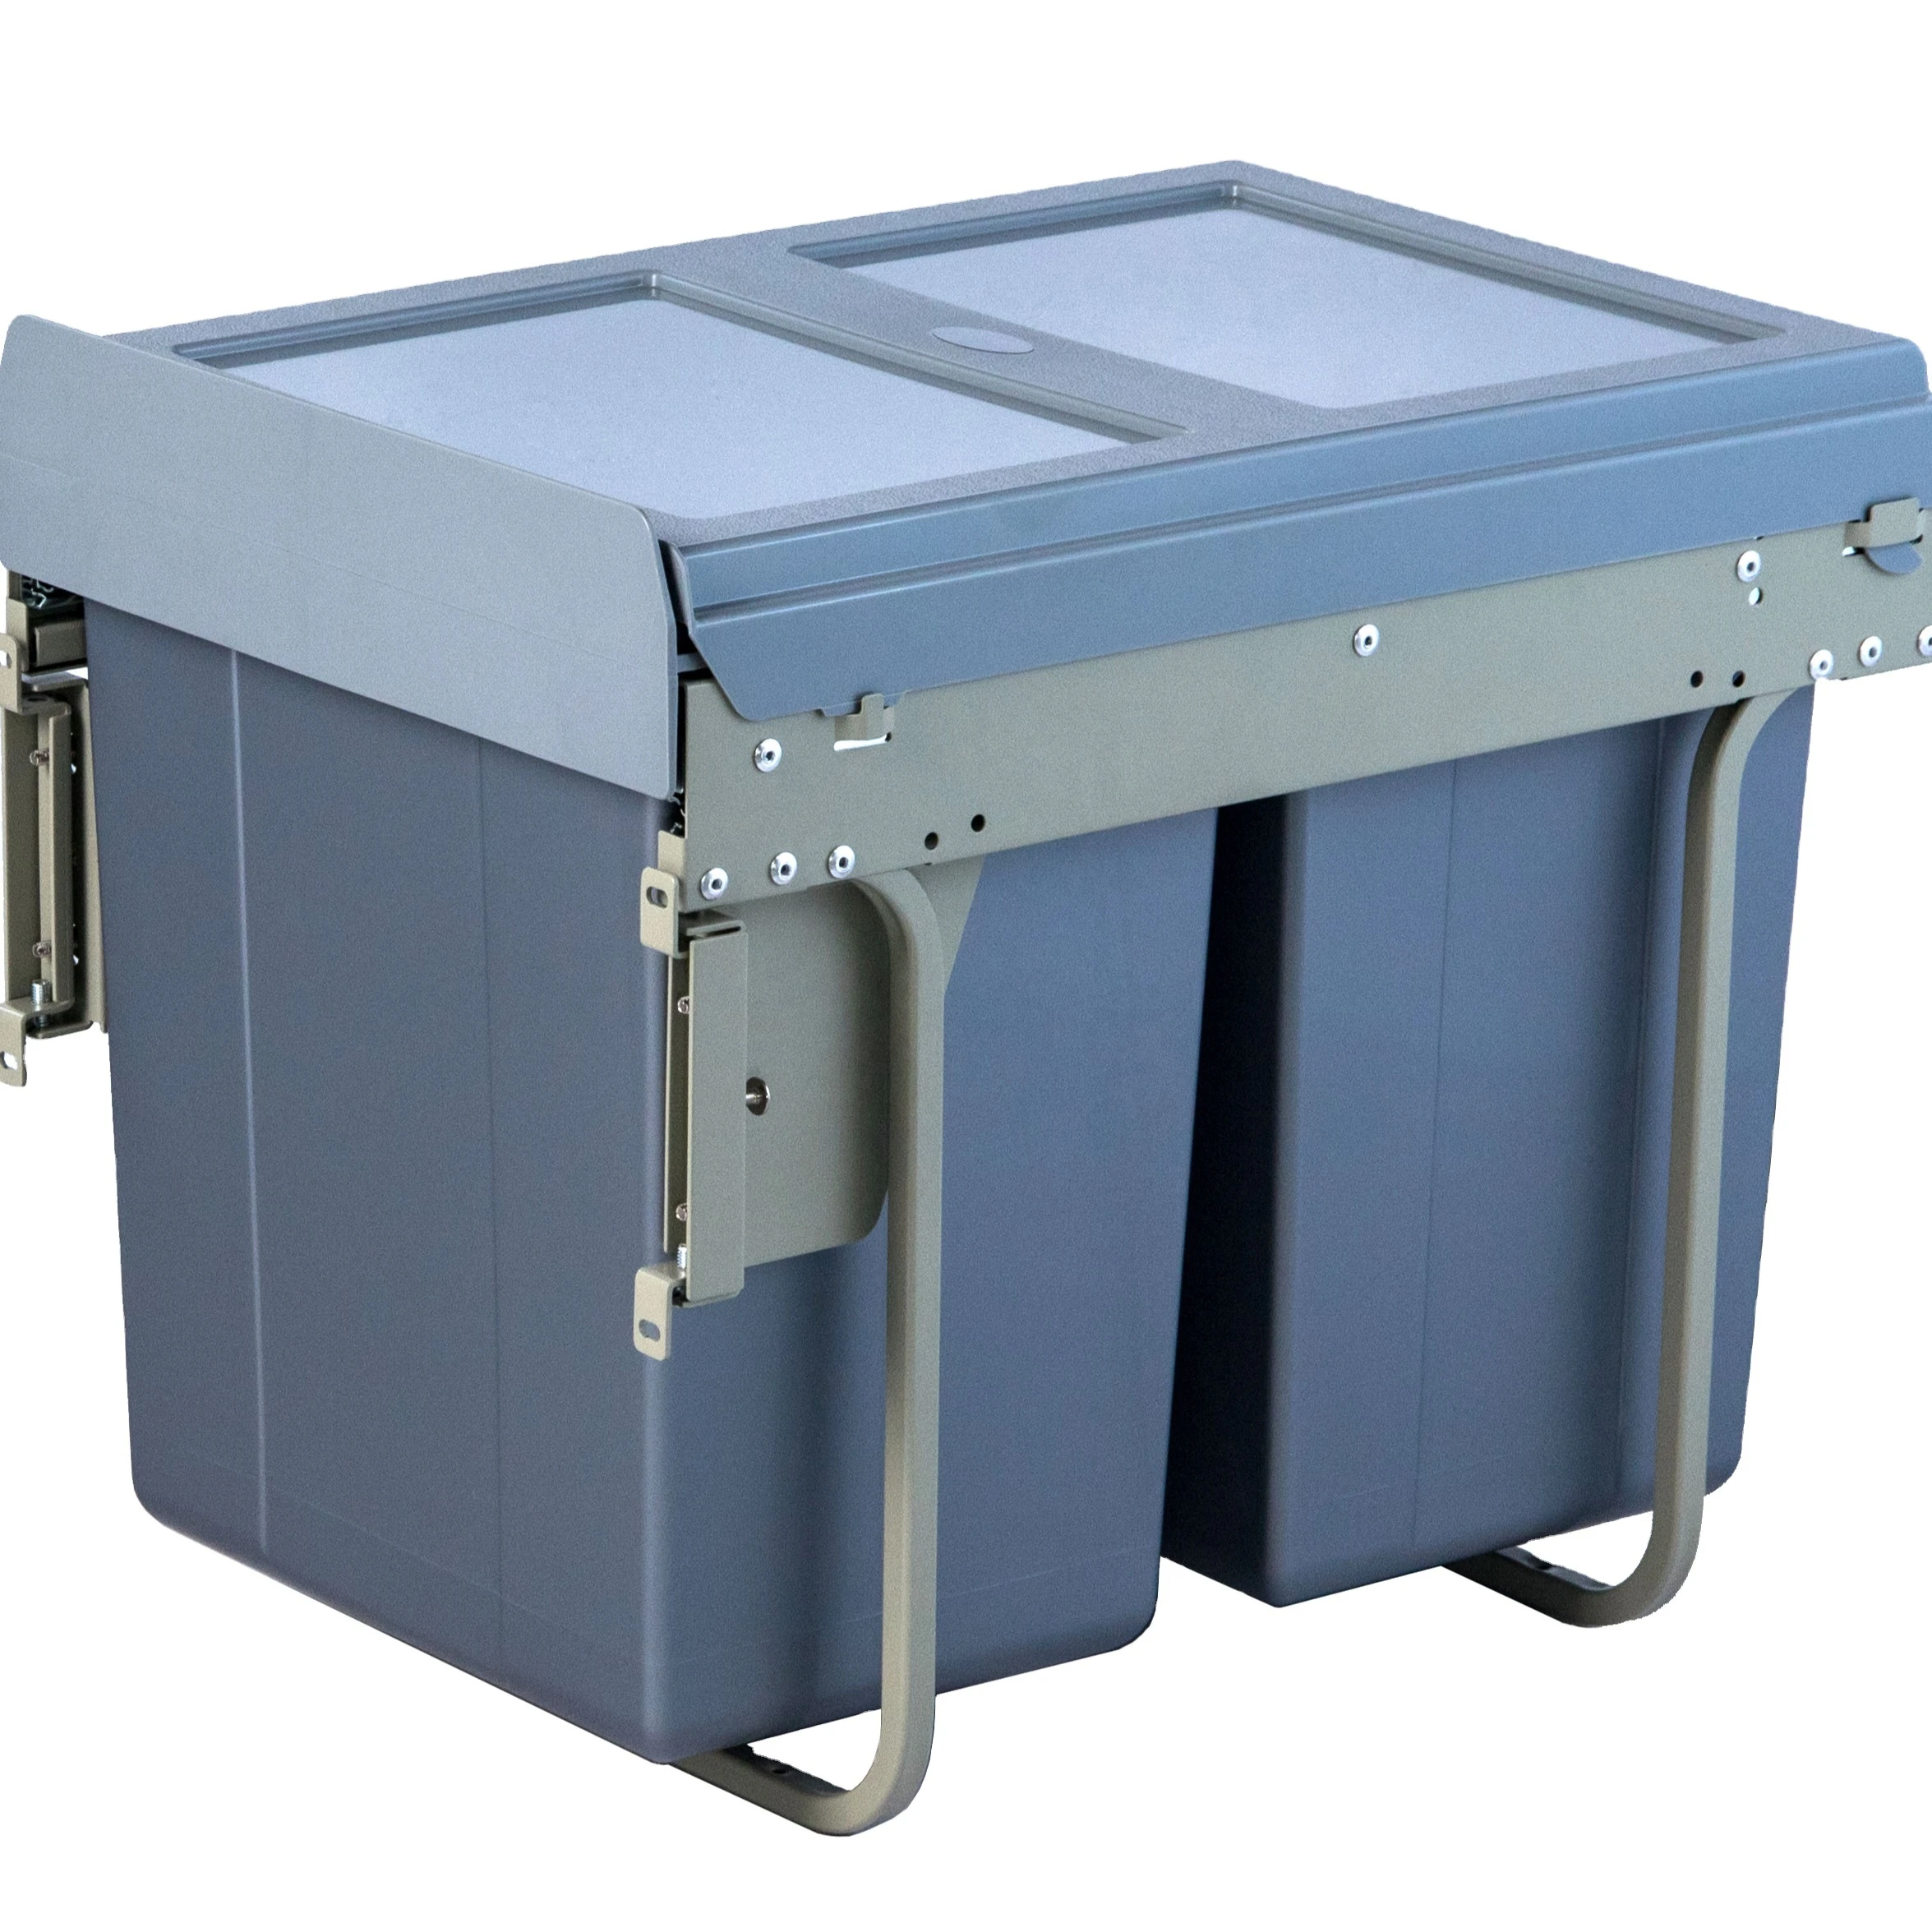 Foldable cabinet dust rubbish garbage plastic bins kitchen trash waste bin